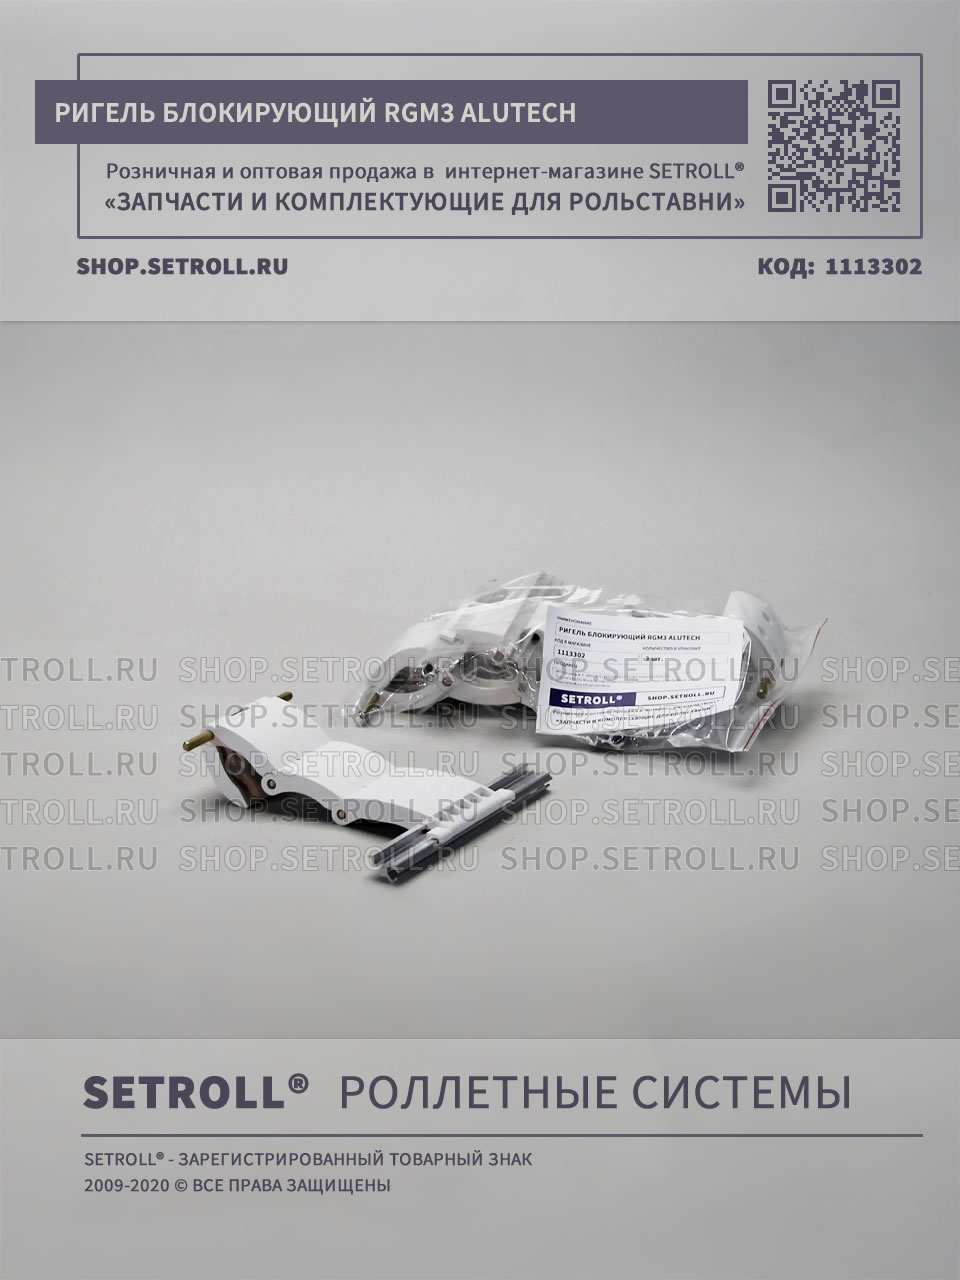 rgm3-alutekh-03-shop.setroll.ru